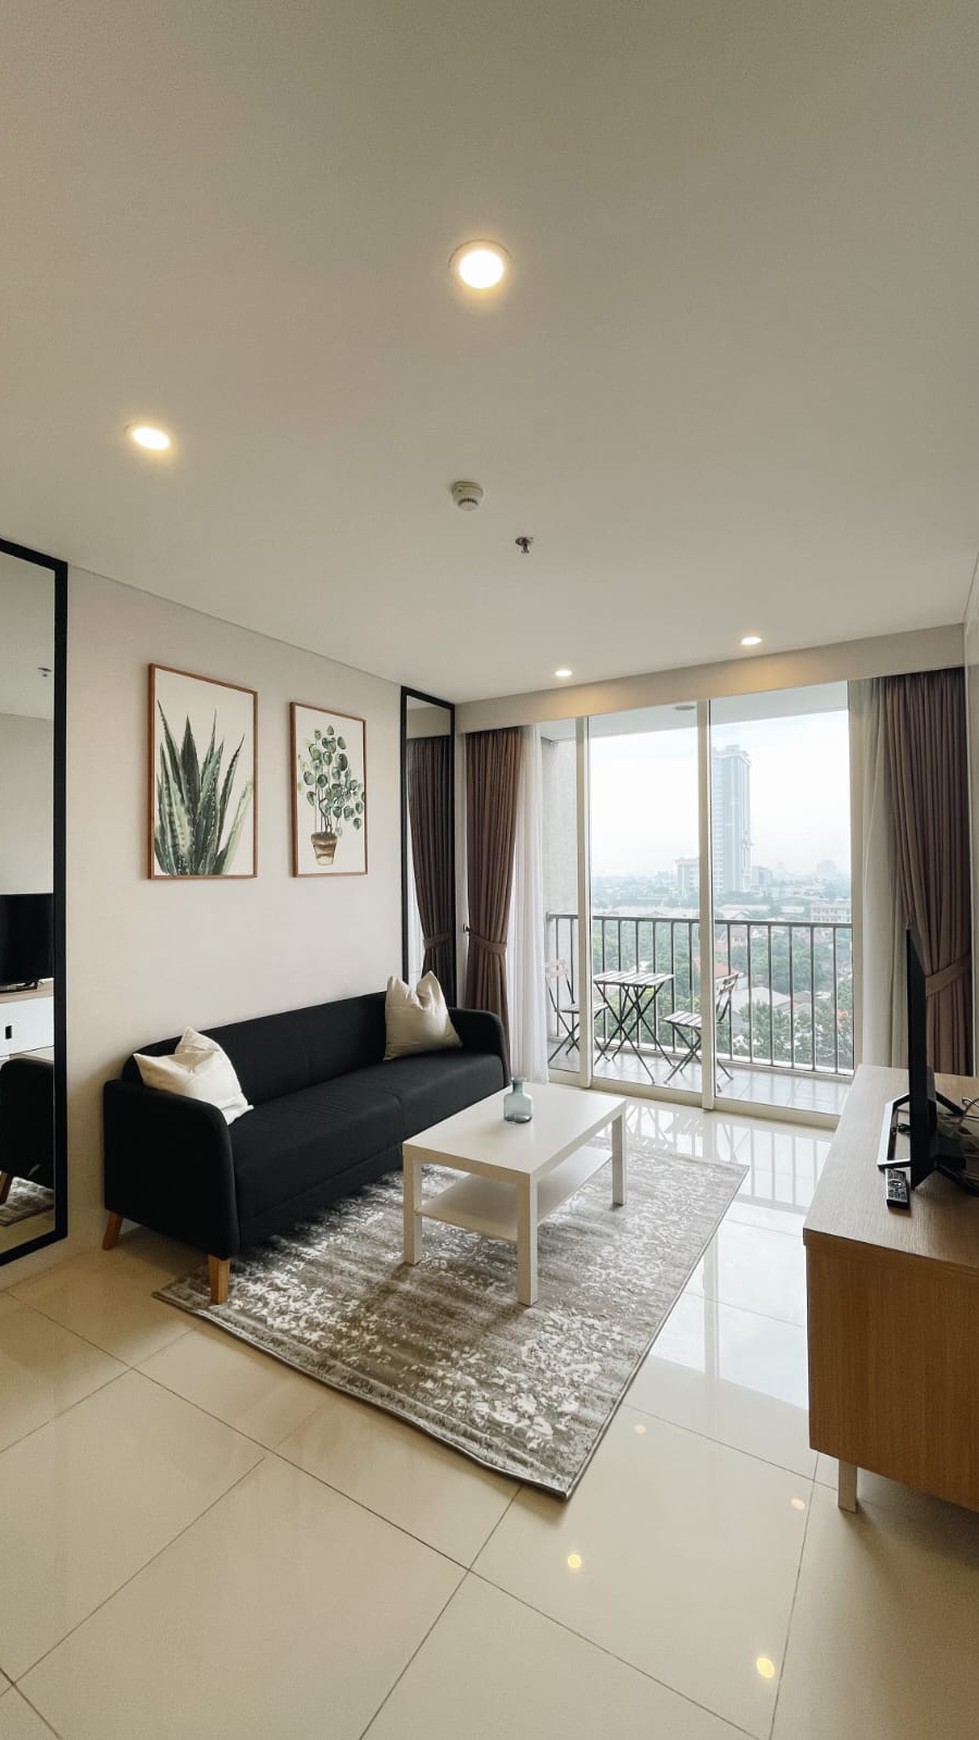 Apartemen cantik full furnish di jakarta selatan